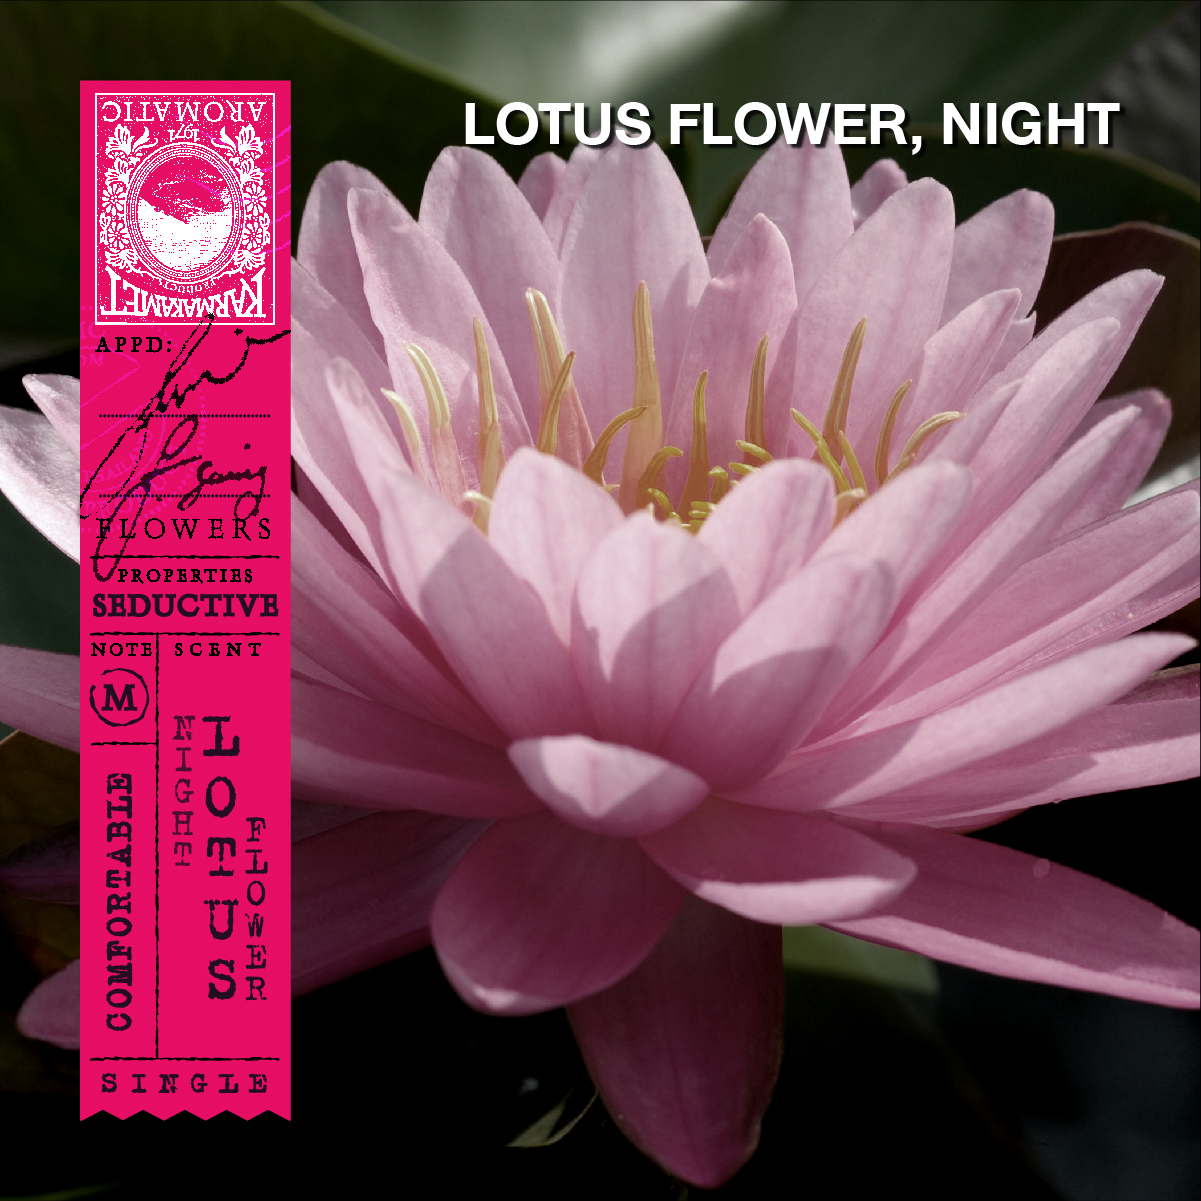 KARMAKAMET Original Room Perfume Diffuser / Single คามาคาเมต ก้านไม้หอมกระจายกลิ่น น้ำหอมบ้าน ก้านไม้หอม น้ำหอมปรับอากาศ บ้านหอม  กลิ่น Night Lotus Flowerปริมาณ (มล.) 200